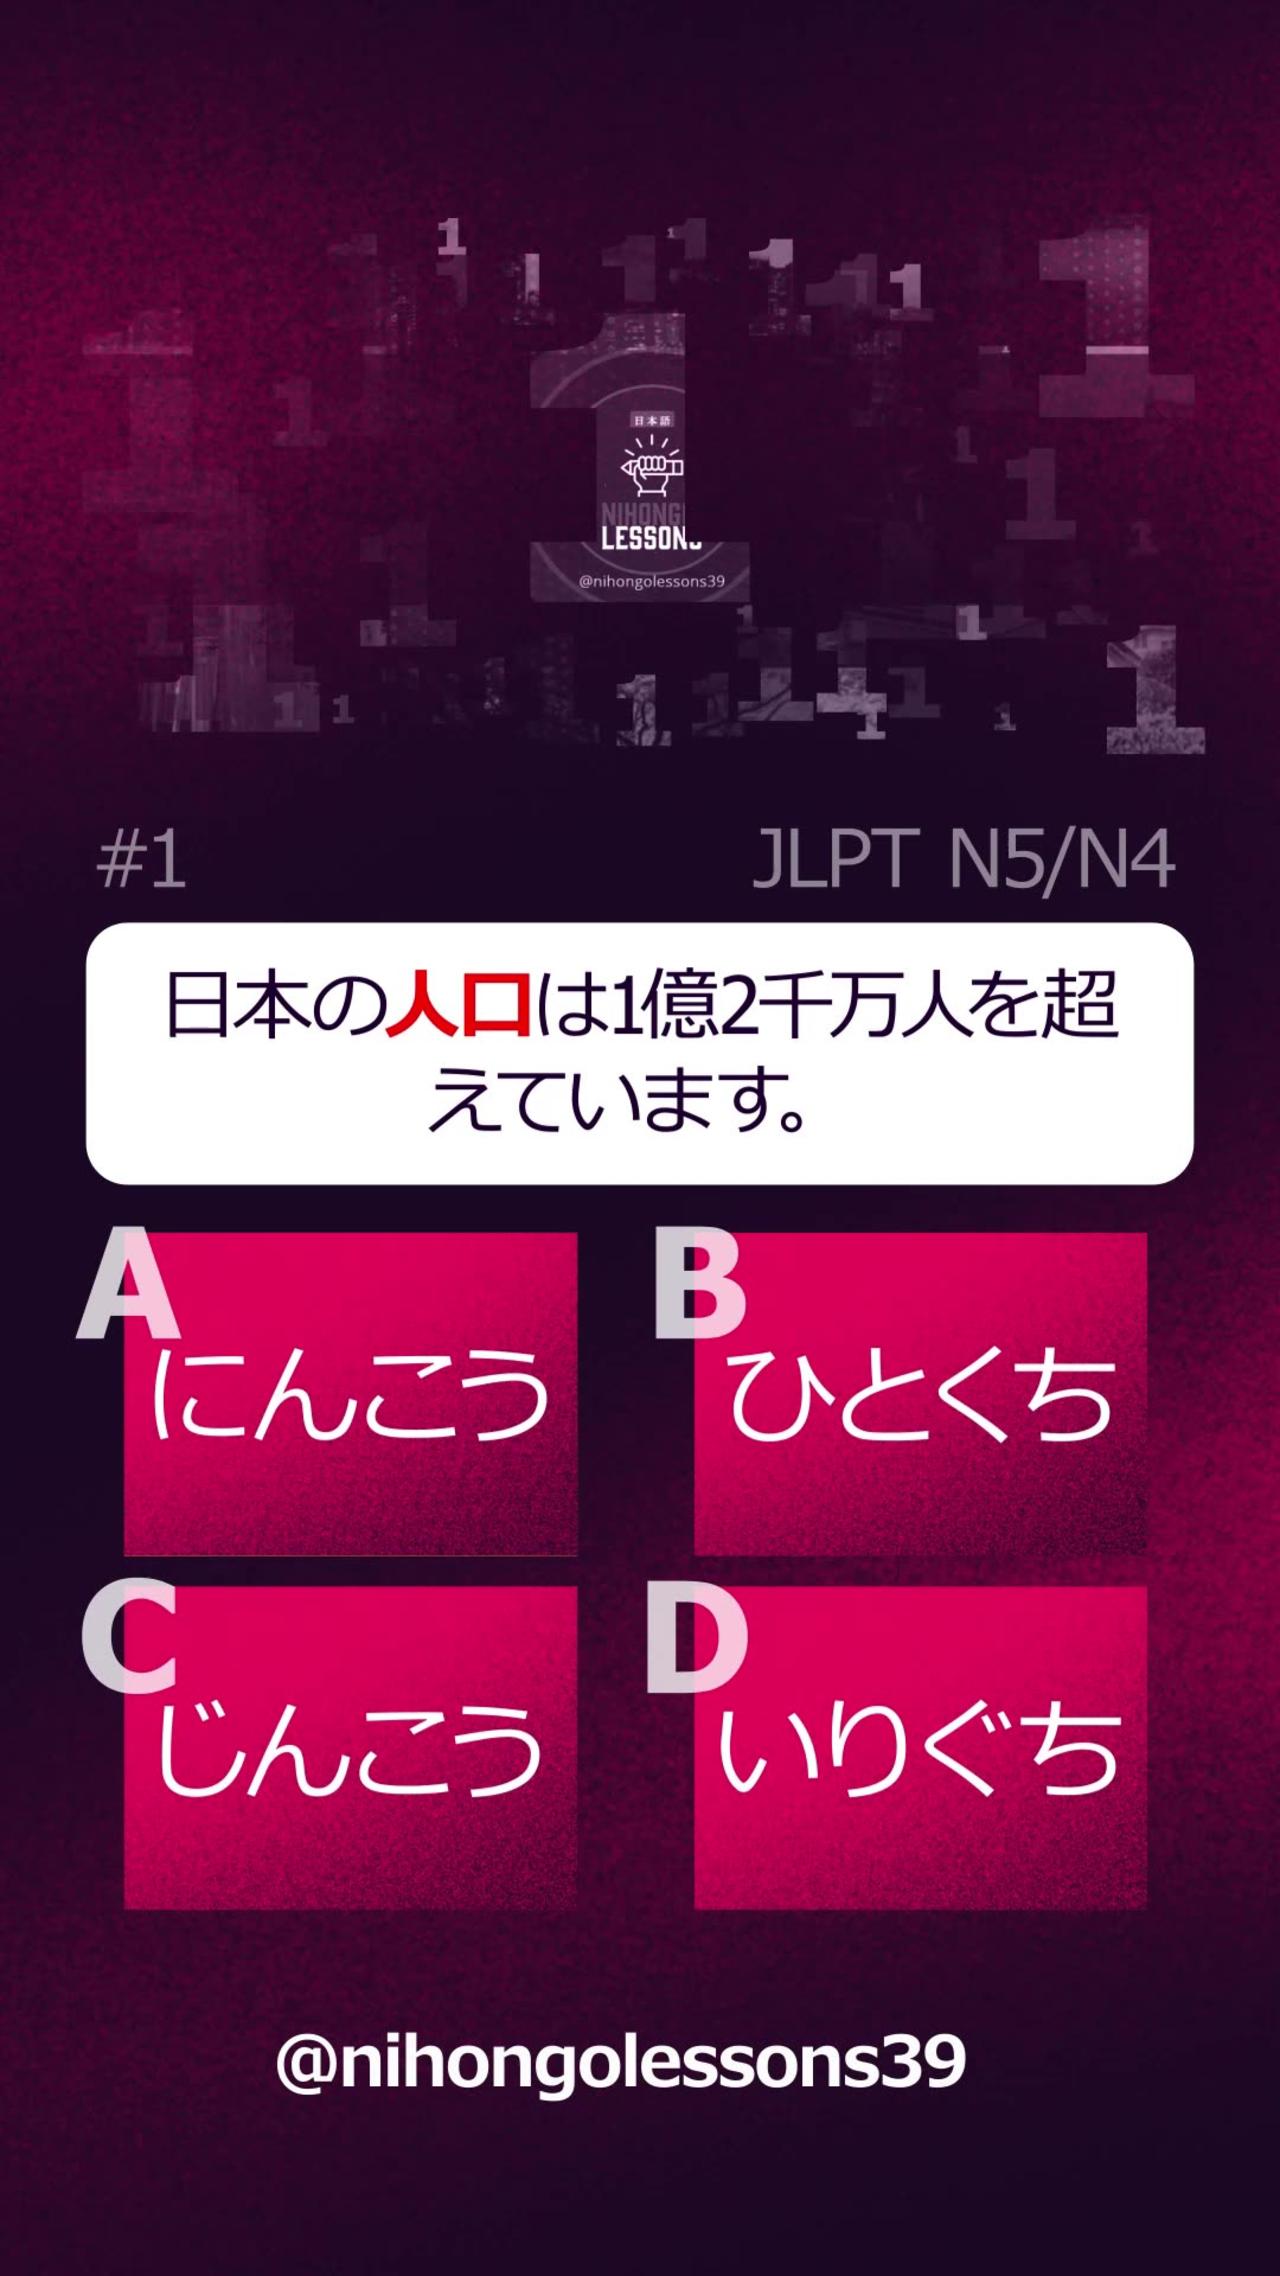 JLPT N5 Q1 Essential Practice for Japanese Language Proficiency